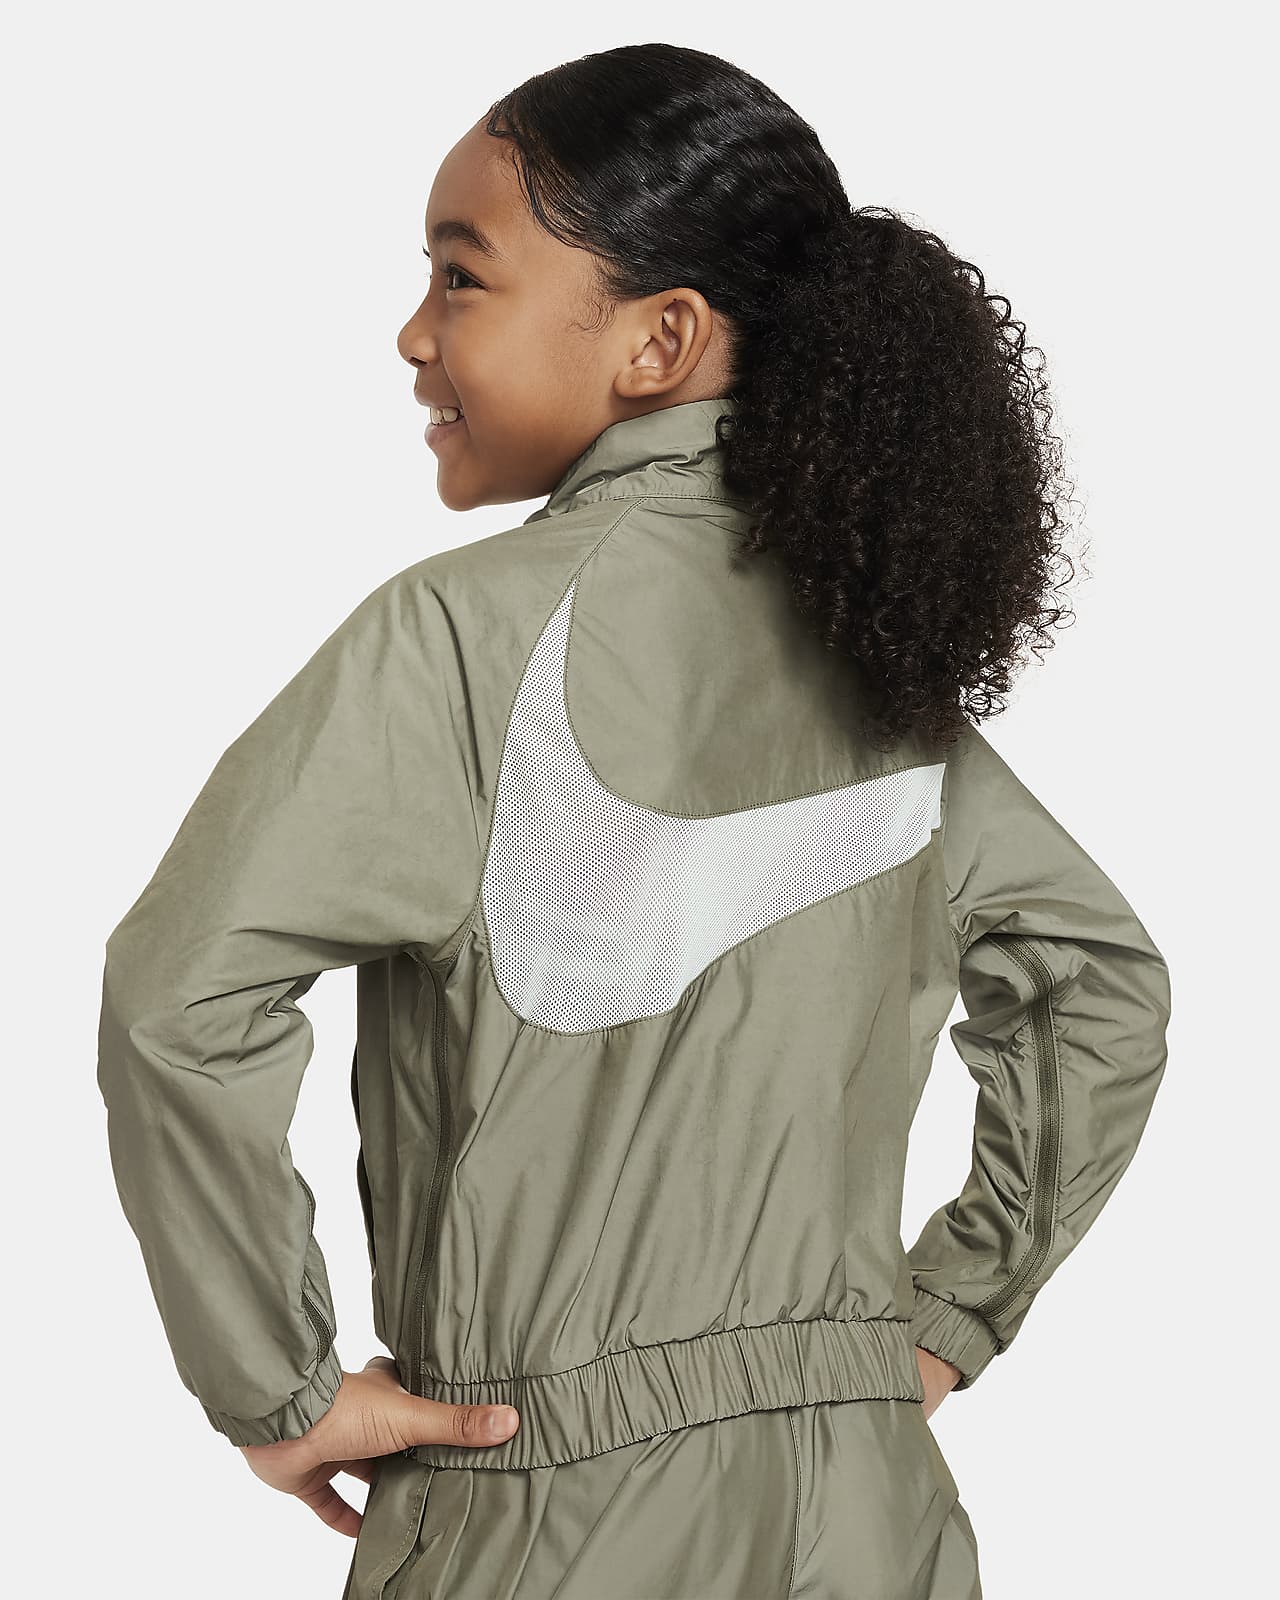 Nike Loose Sportswear (Girls\') Jacket. Big Windrunner Kids\'